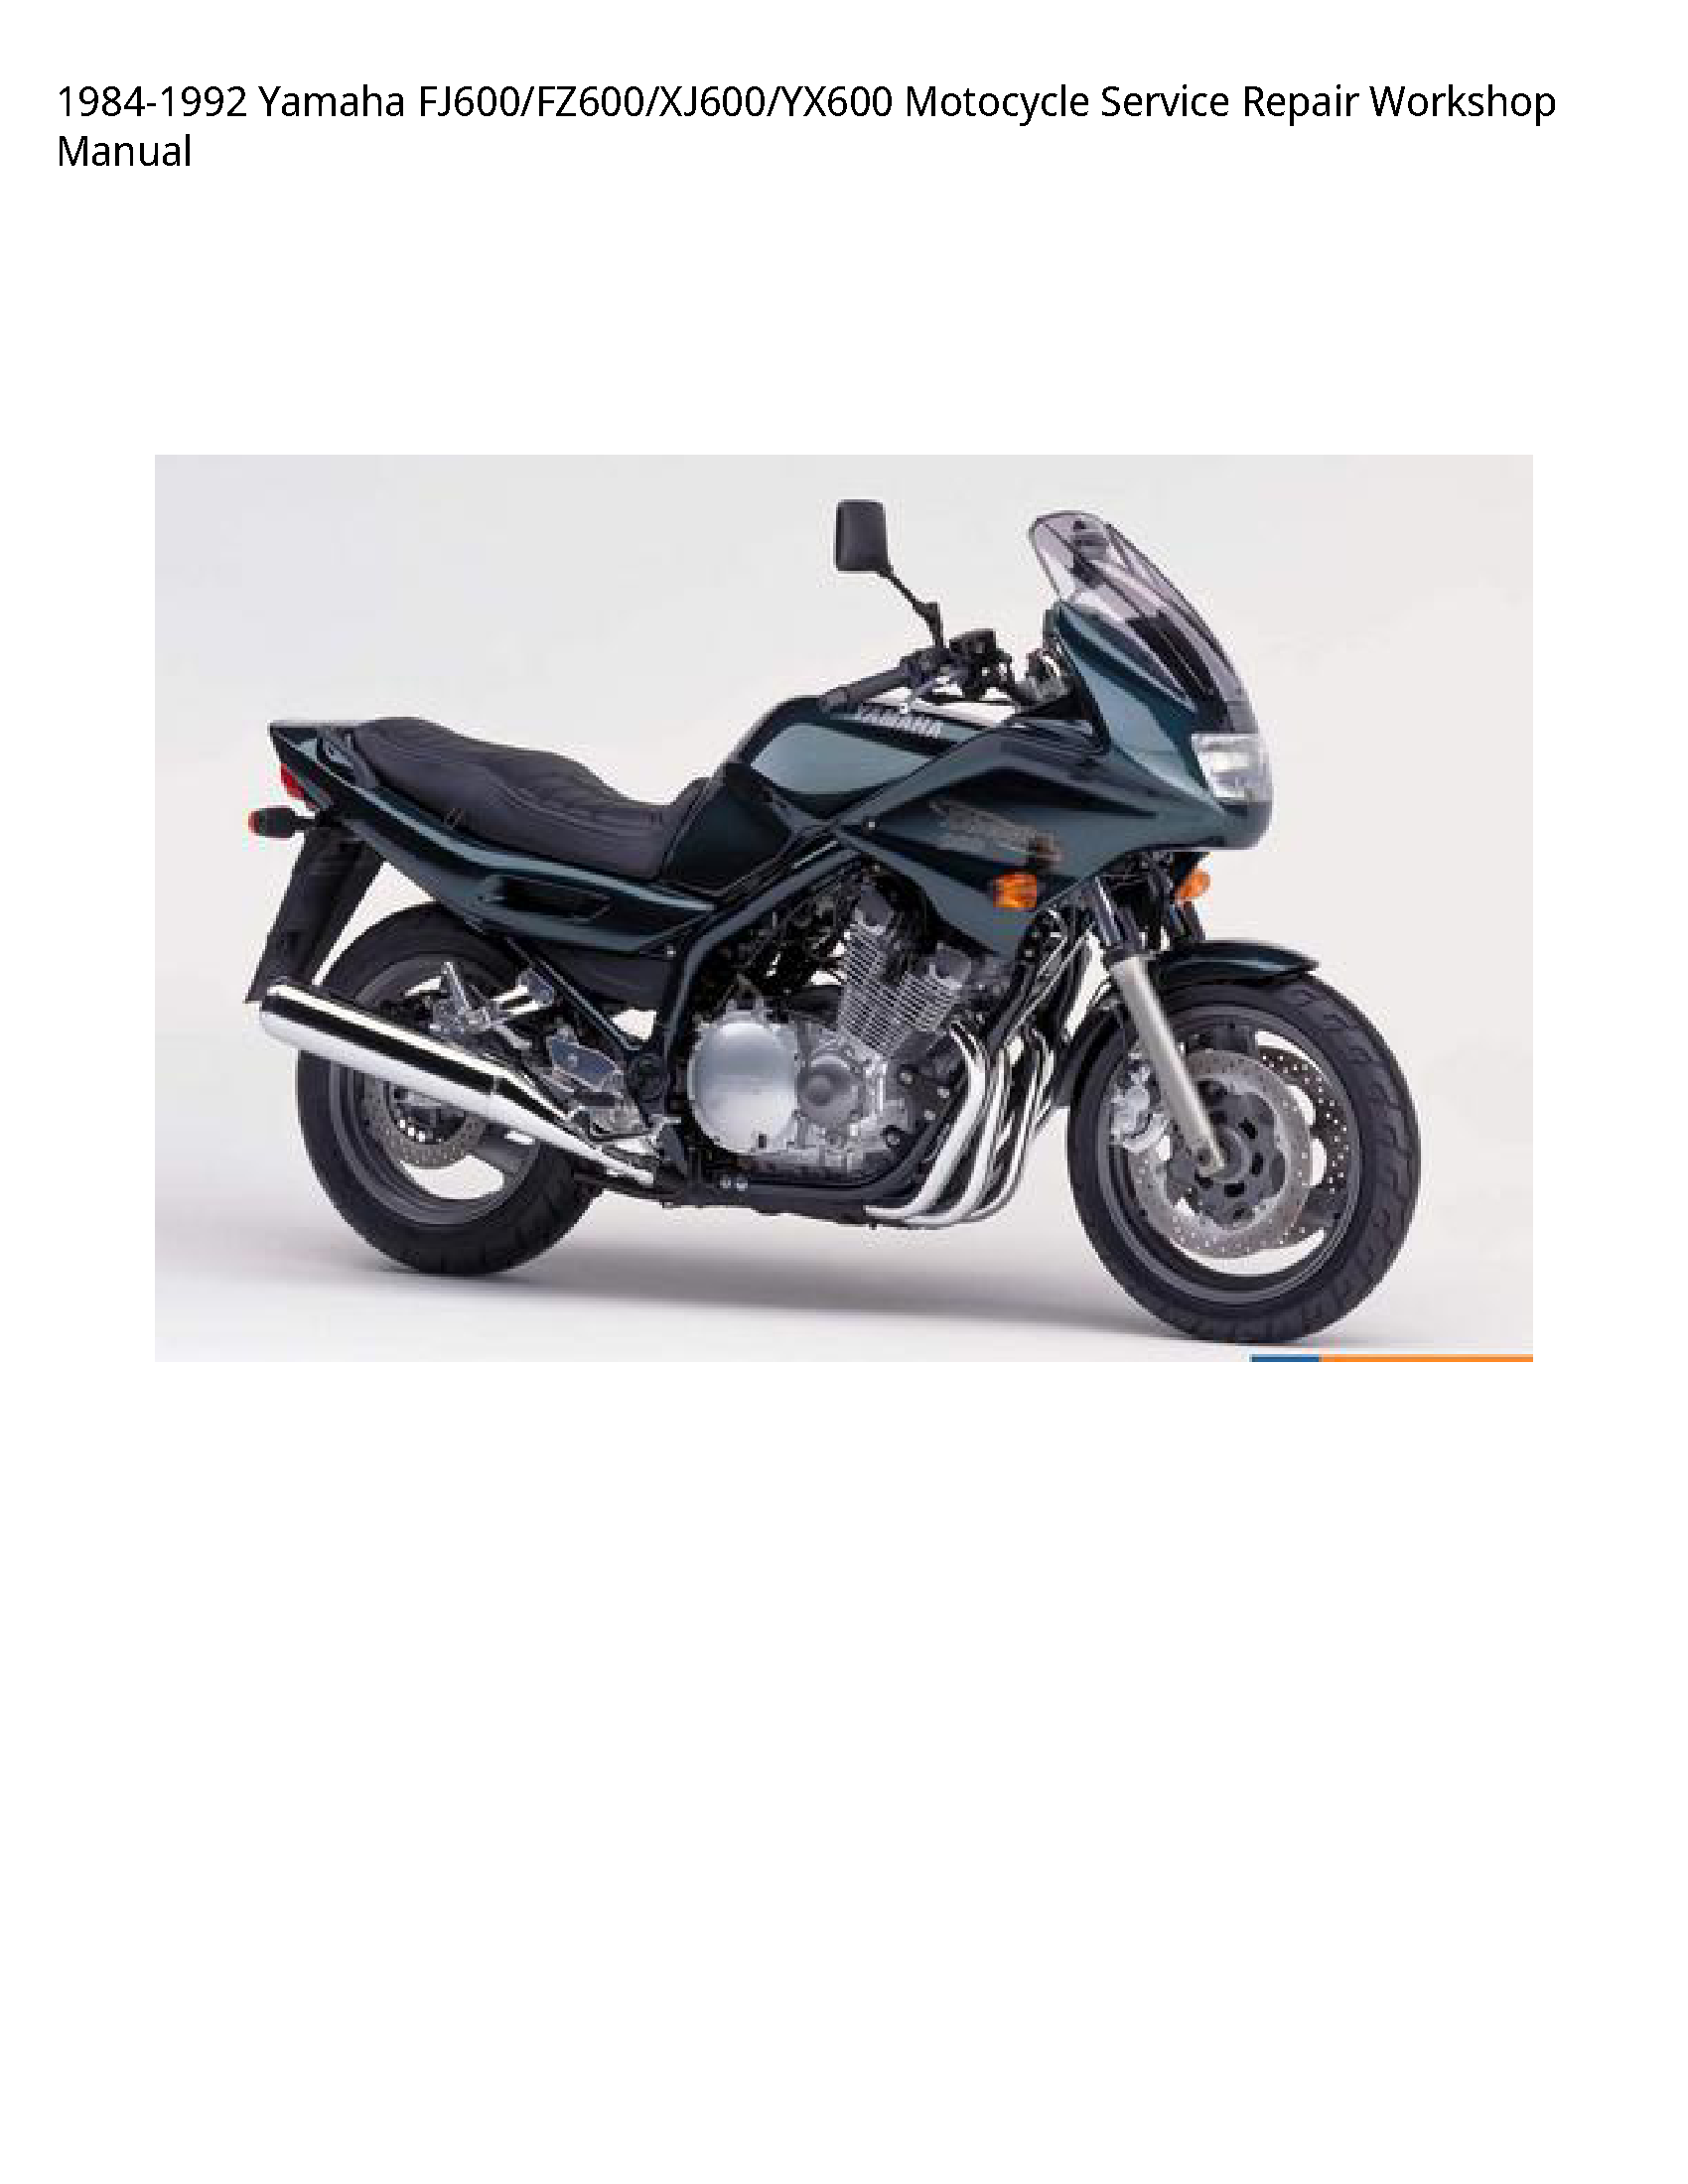 Yamaha FJ600 Motocycle manual